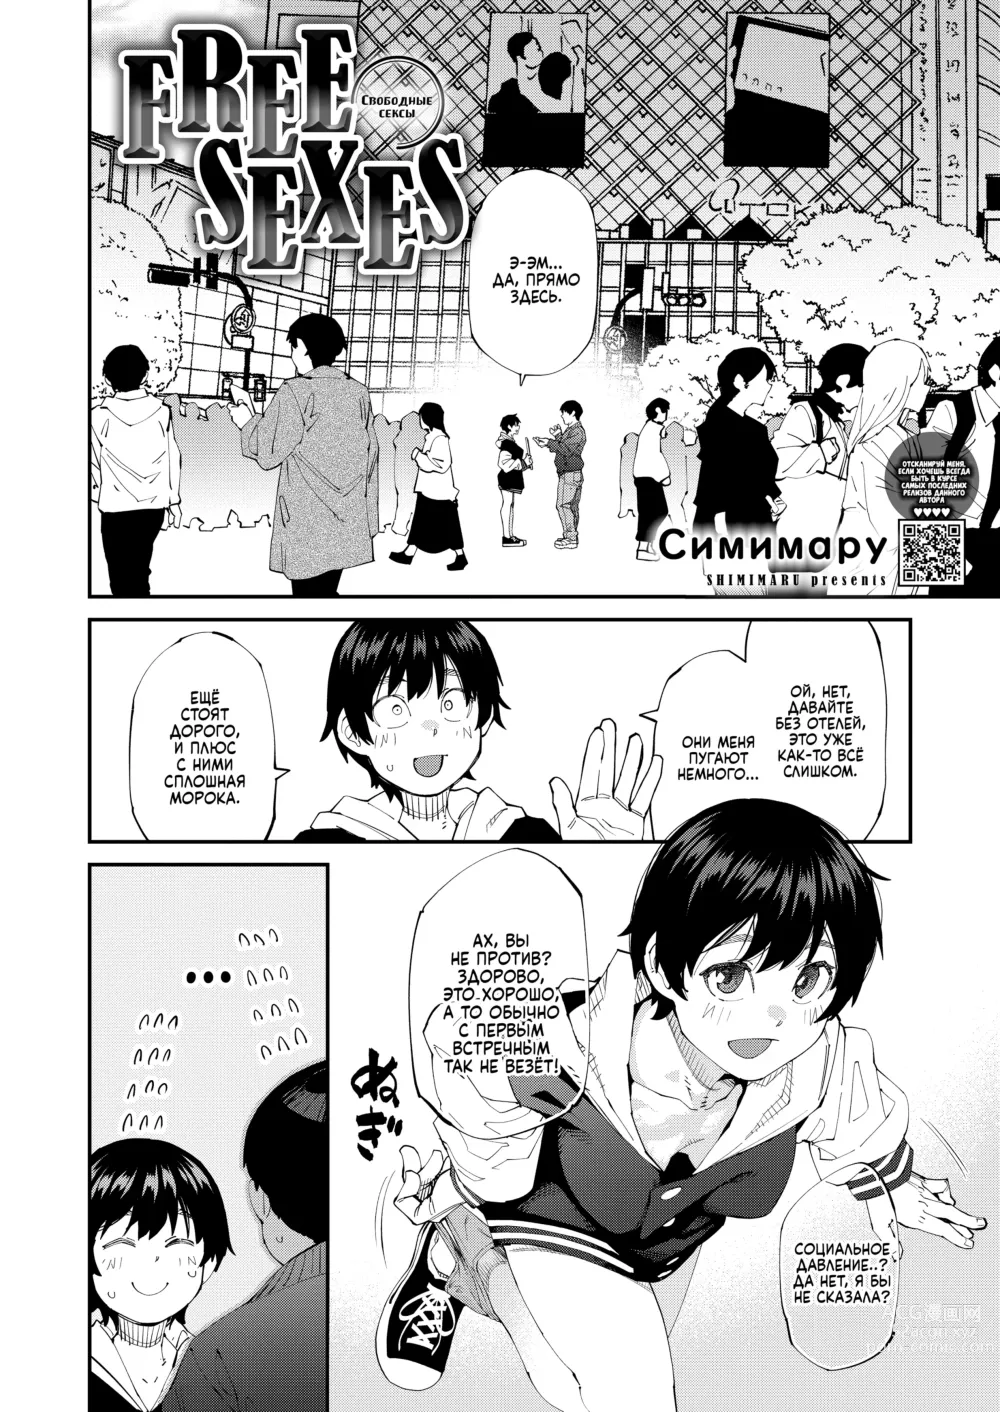 Page 2 of manga FREE SEXES